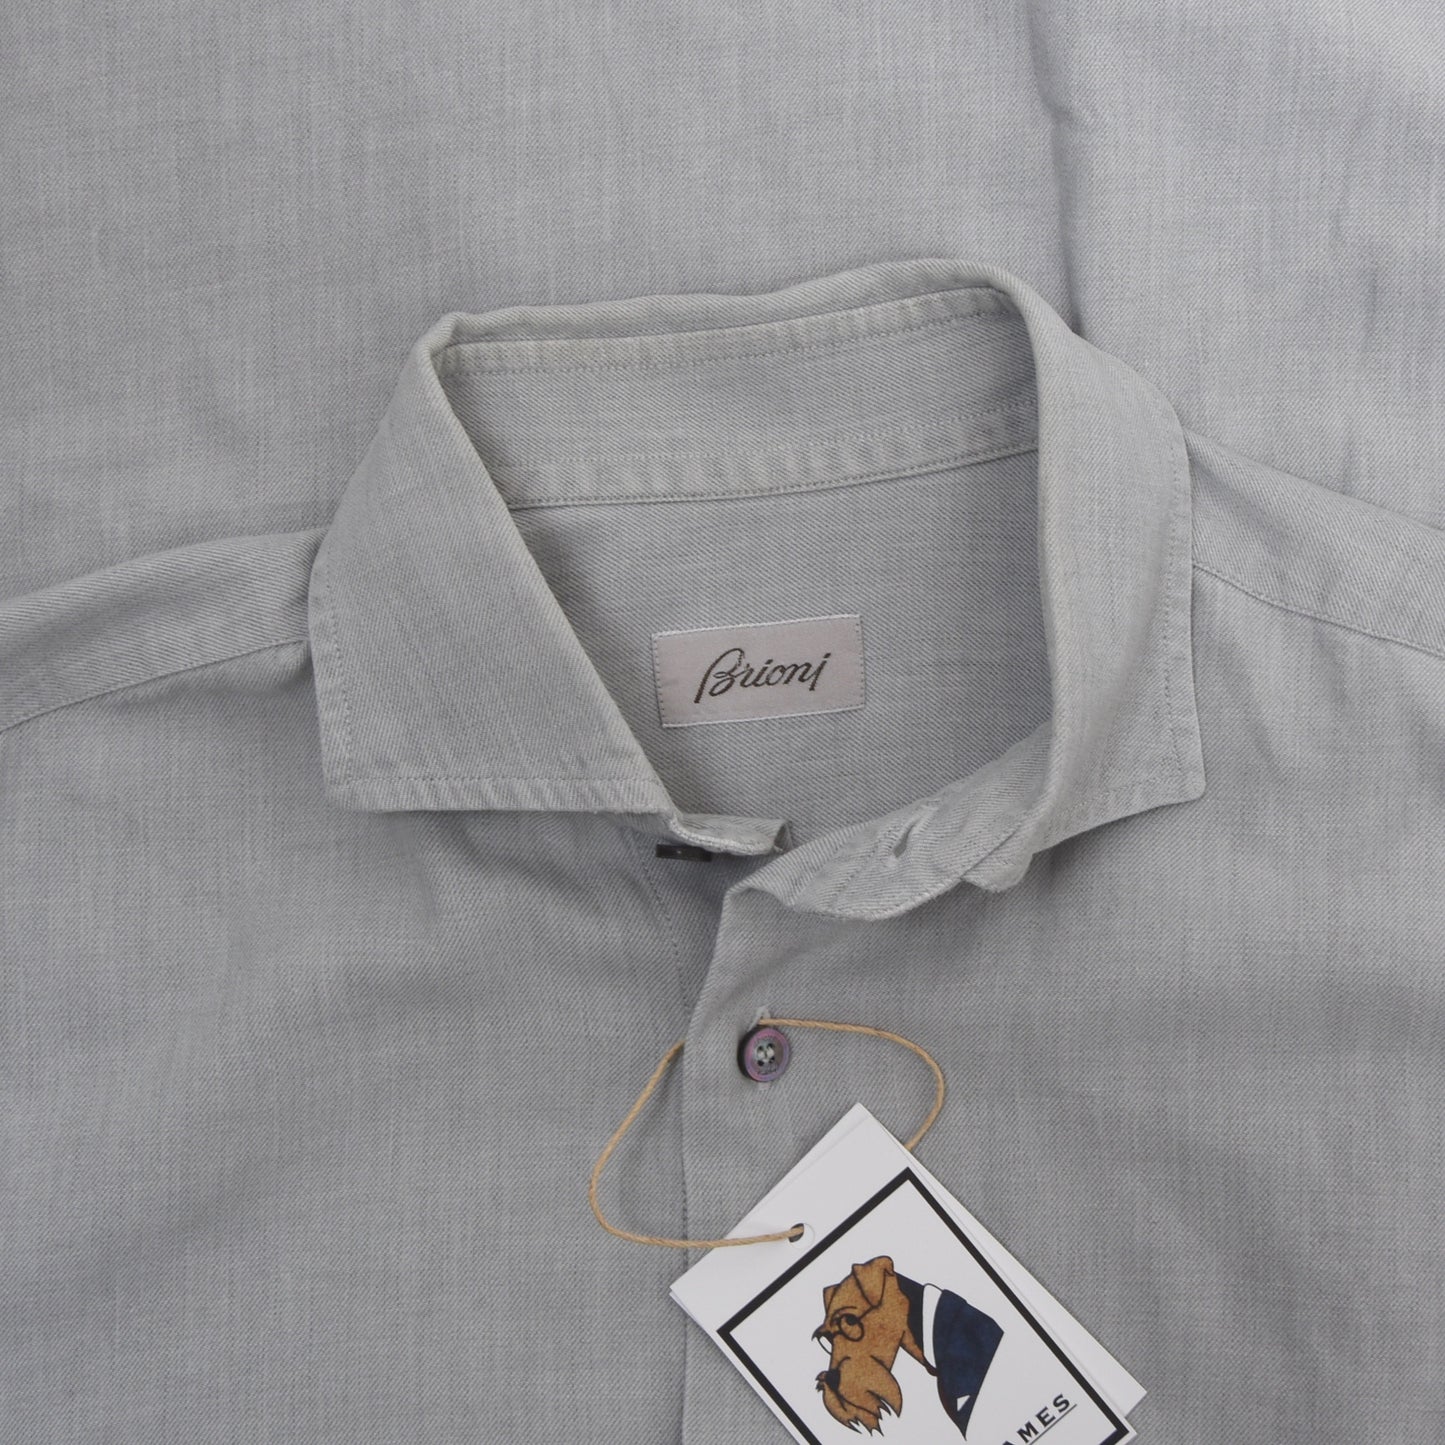 Brioni Cotton Shirt Size III - Light Grey